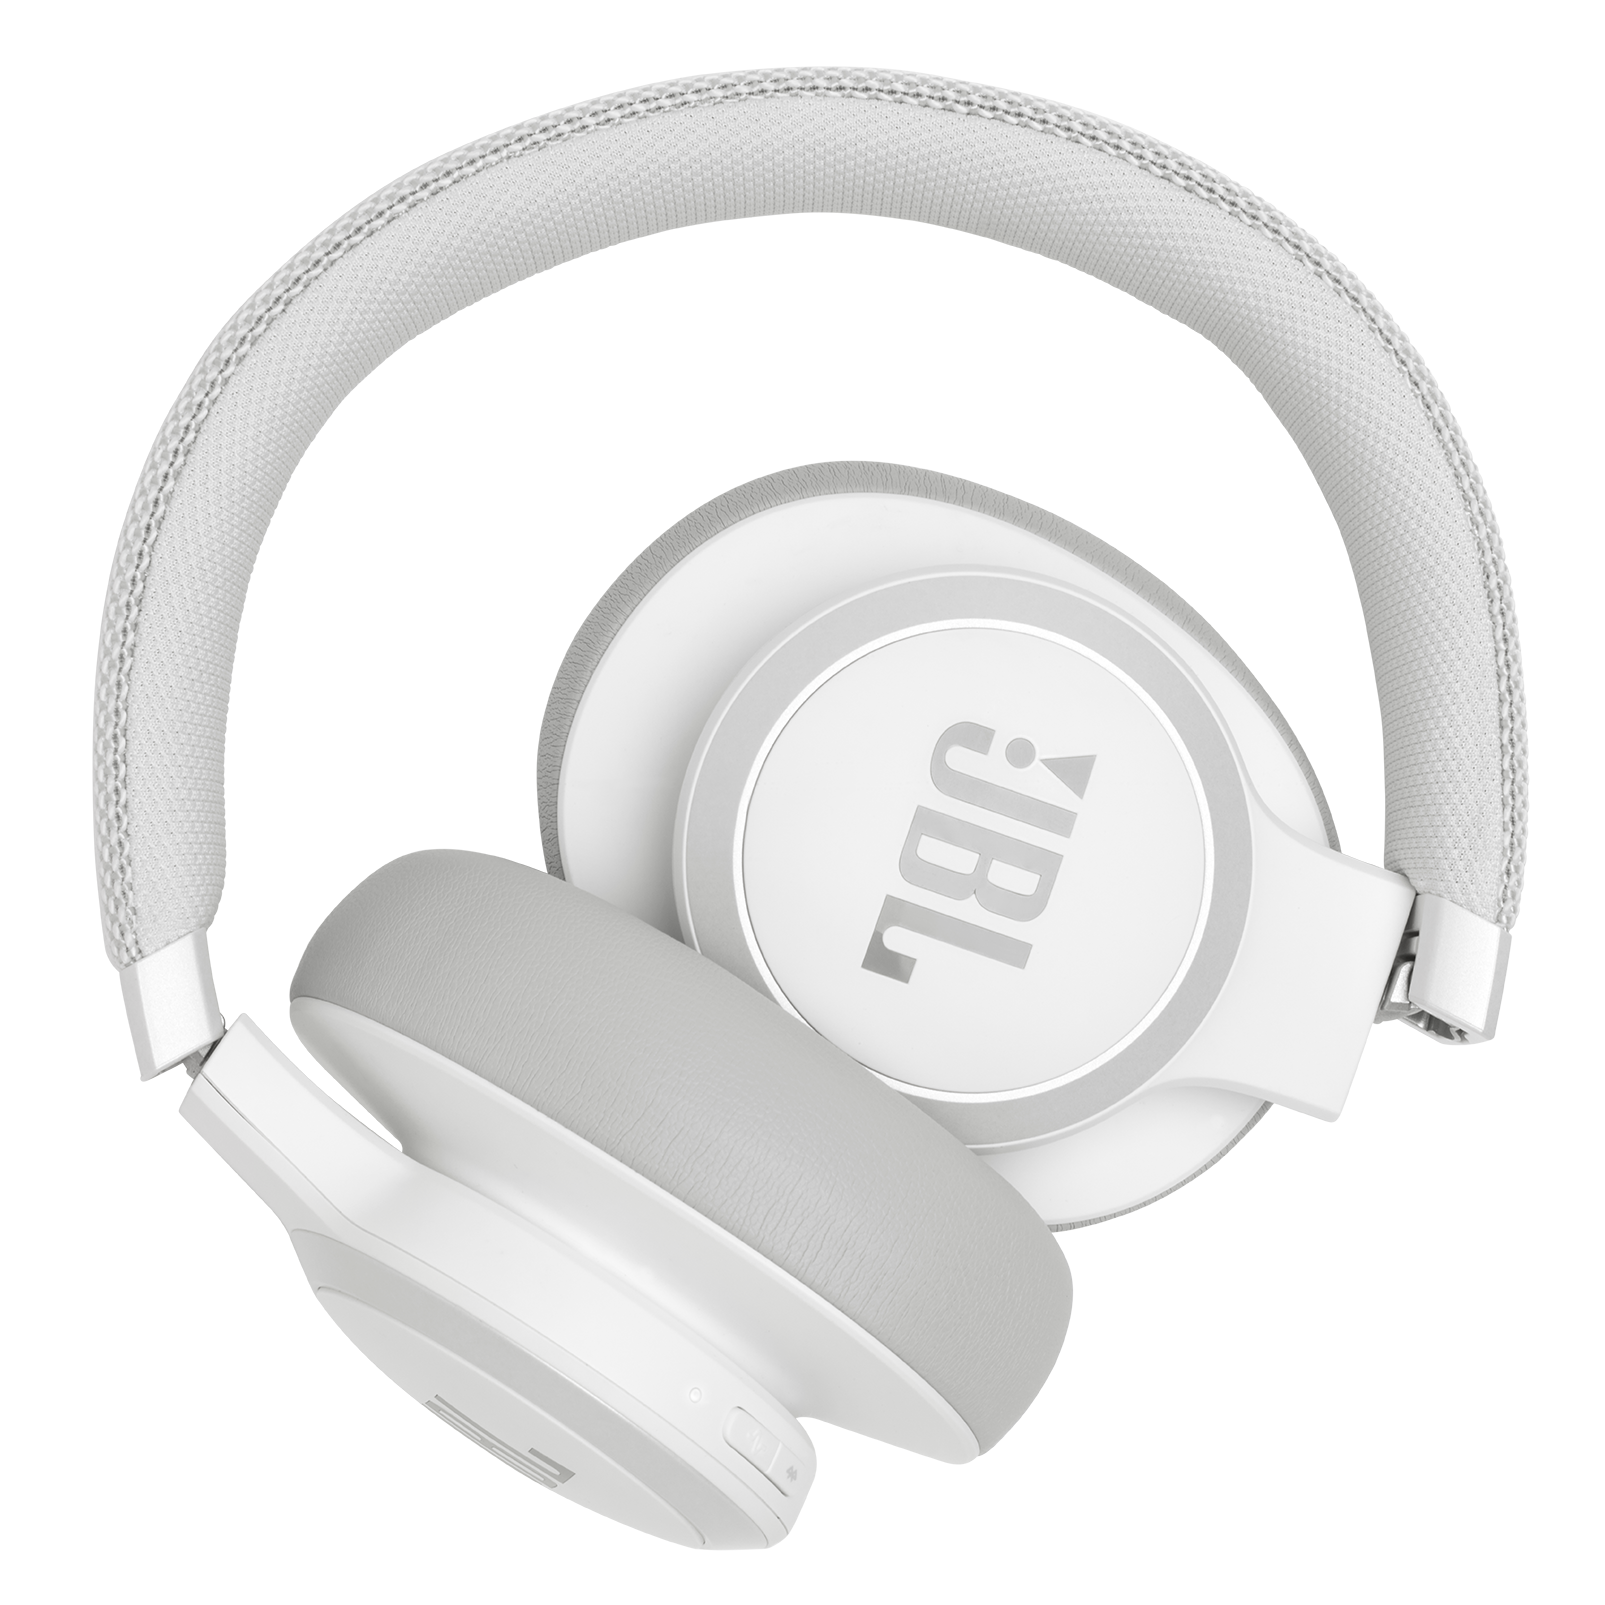 JBL Live 650BTNC - White - Wireless Over-Ear Noise-Cancelling Headphones - Detailshot 6